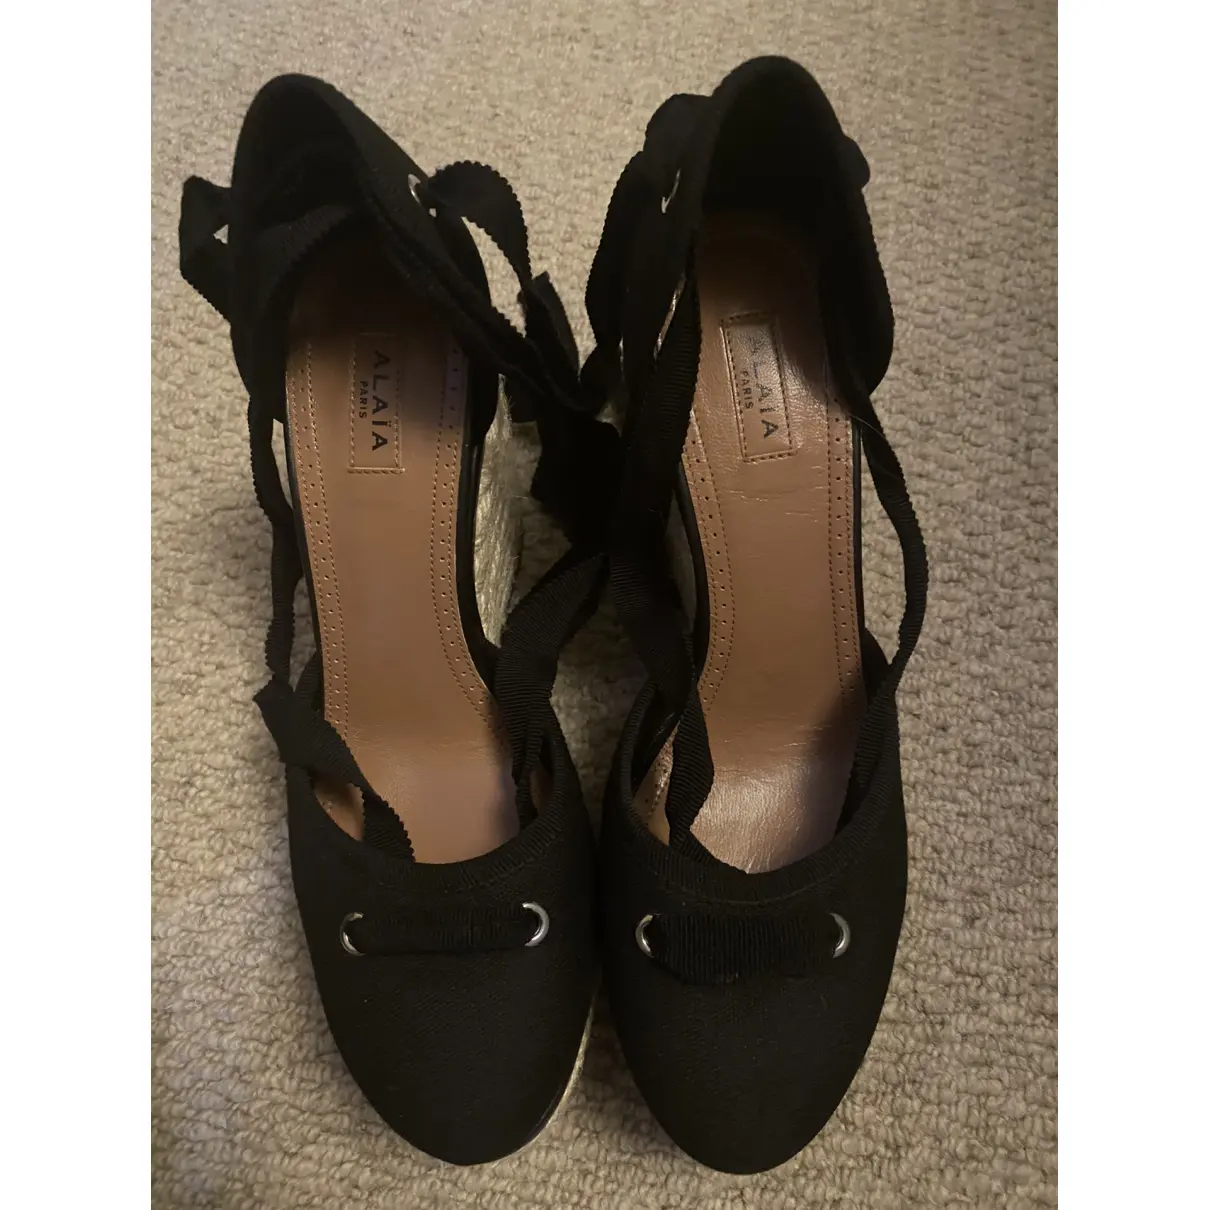 Buy Alaïa Cloth heels online